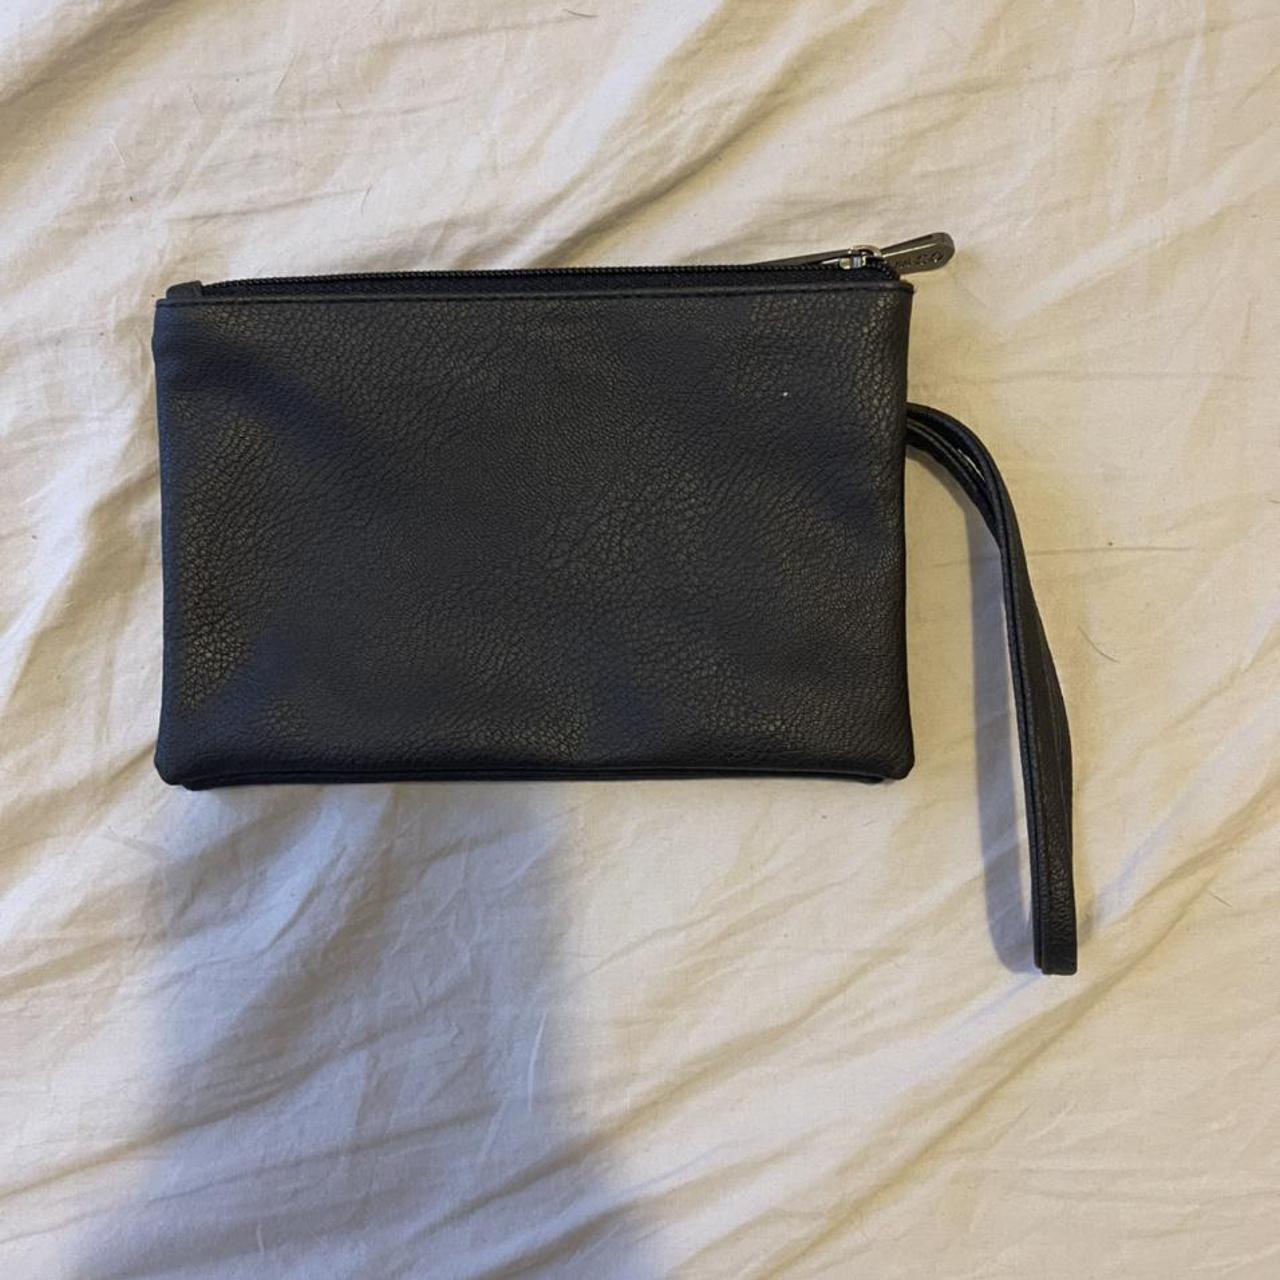 Black Mimco purse, never used. - Depop